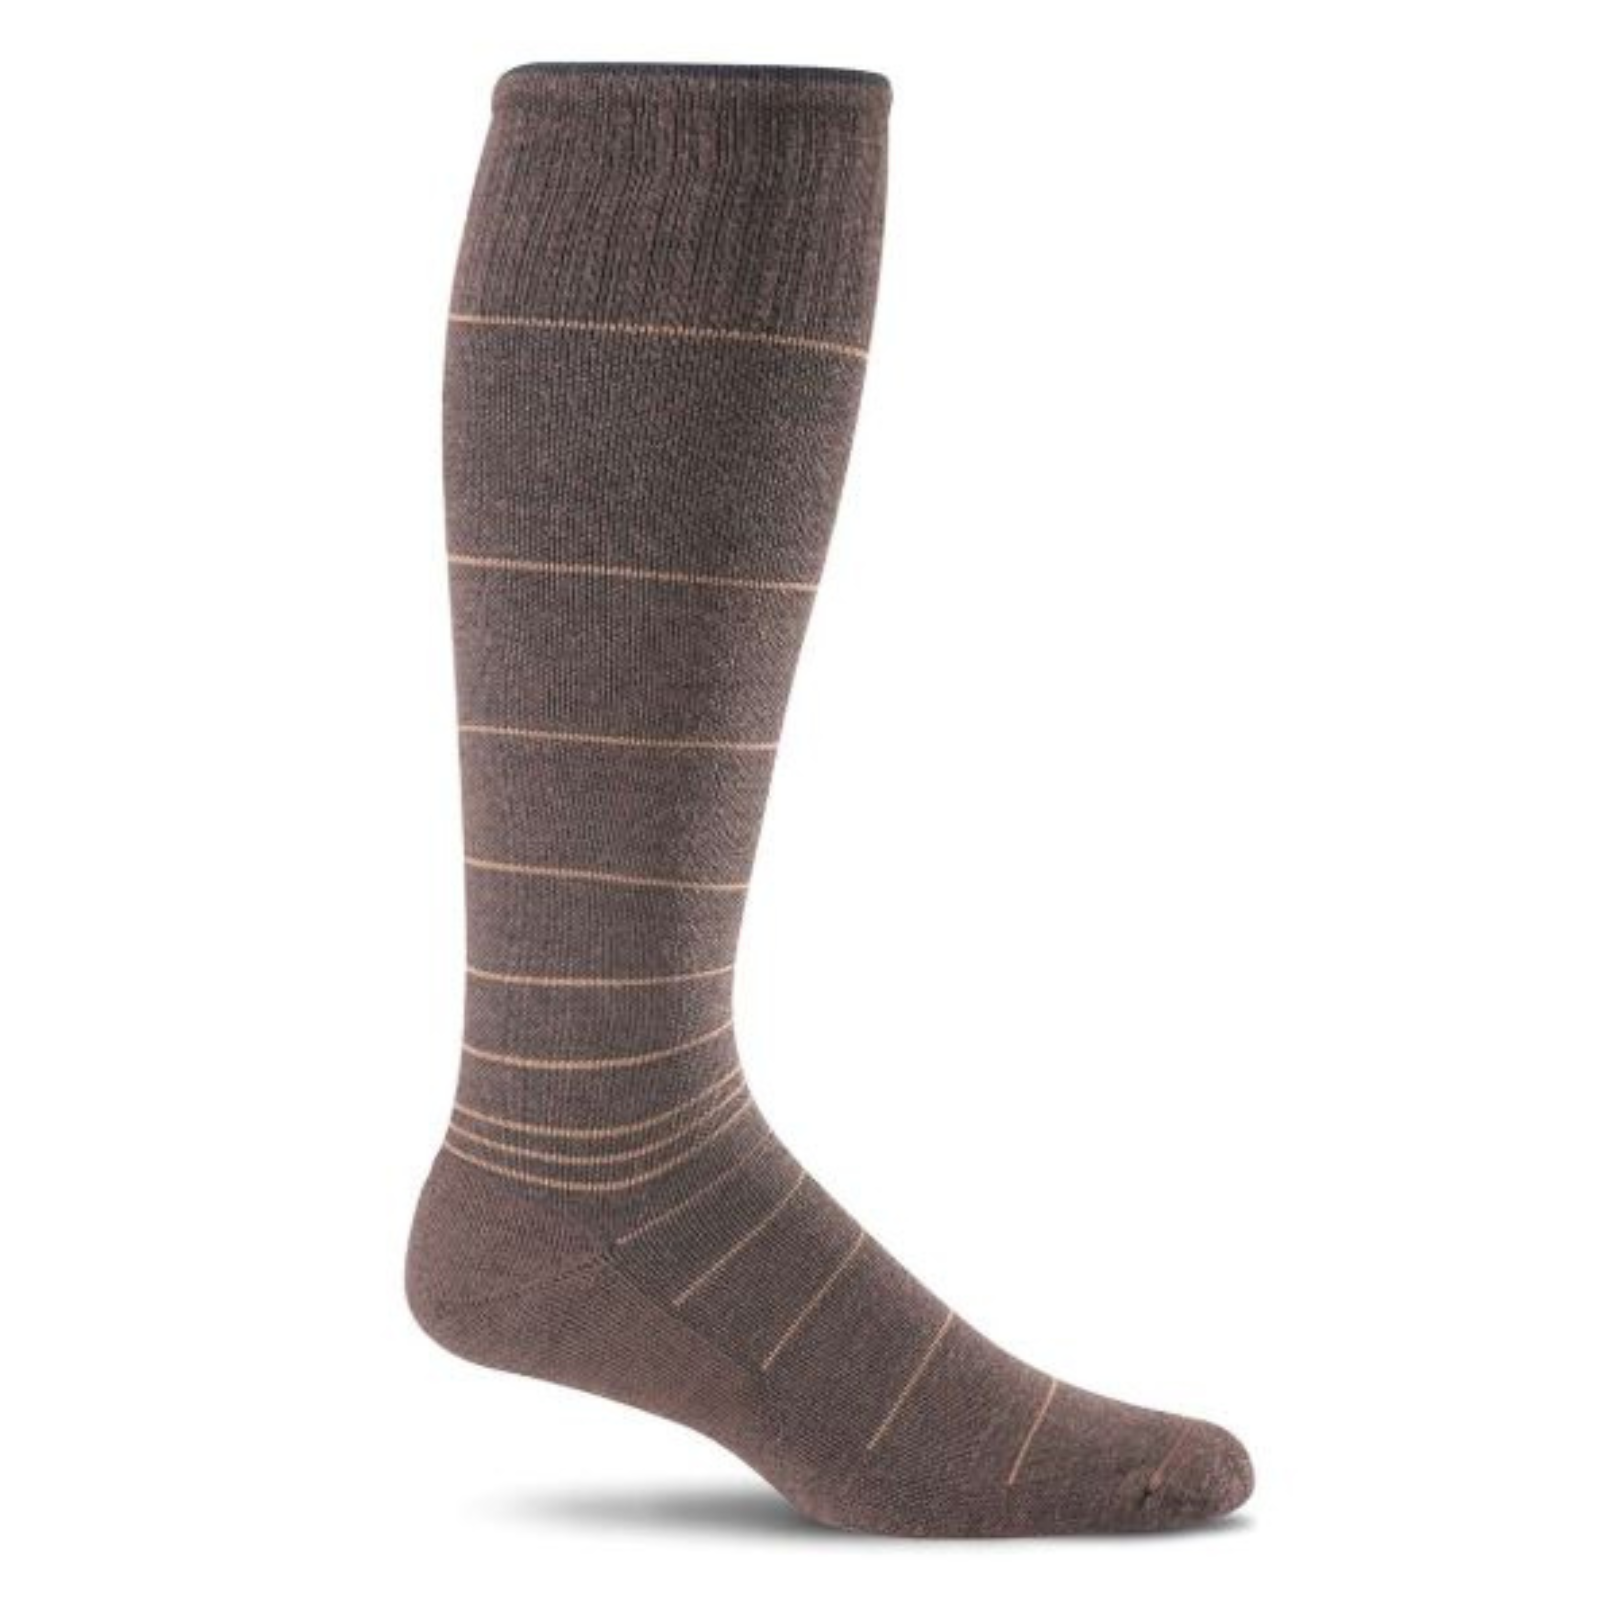 Sockwell Circulator moderate graduated compression (15-20 mmHg) men's knee high sock in espresso